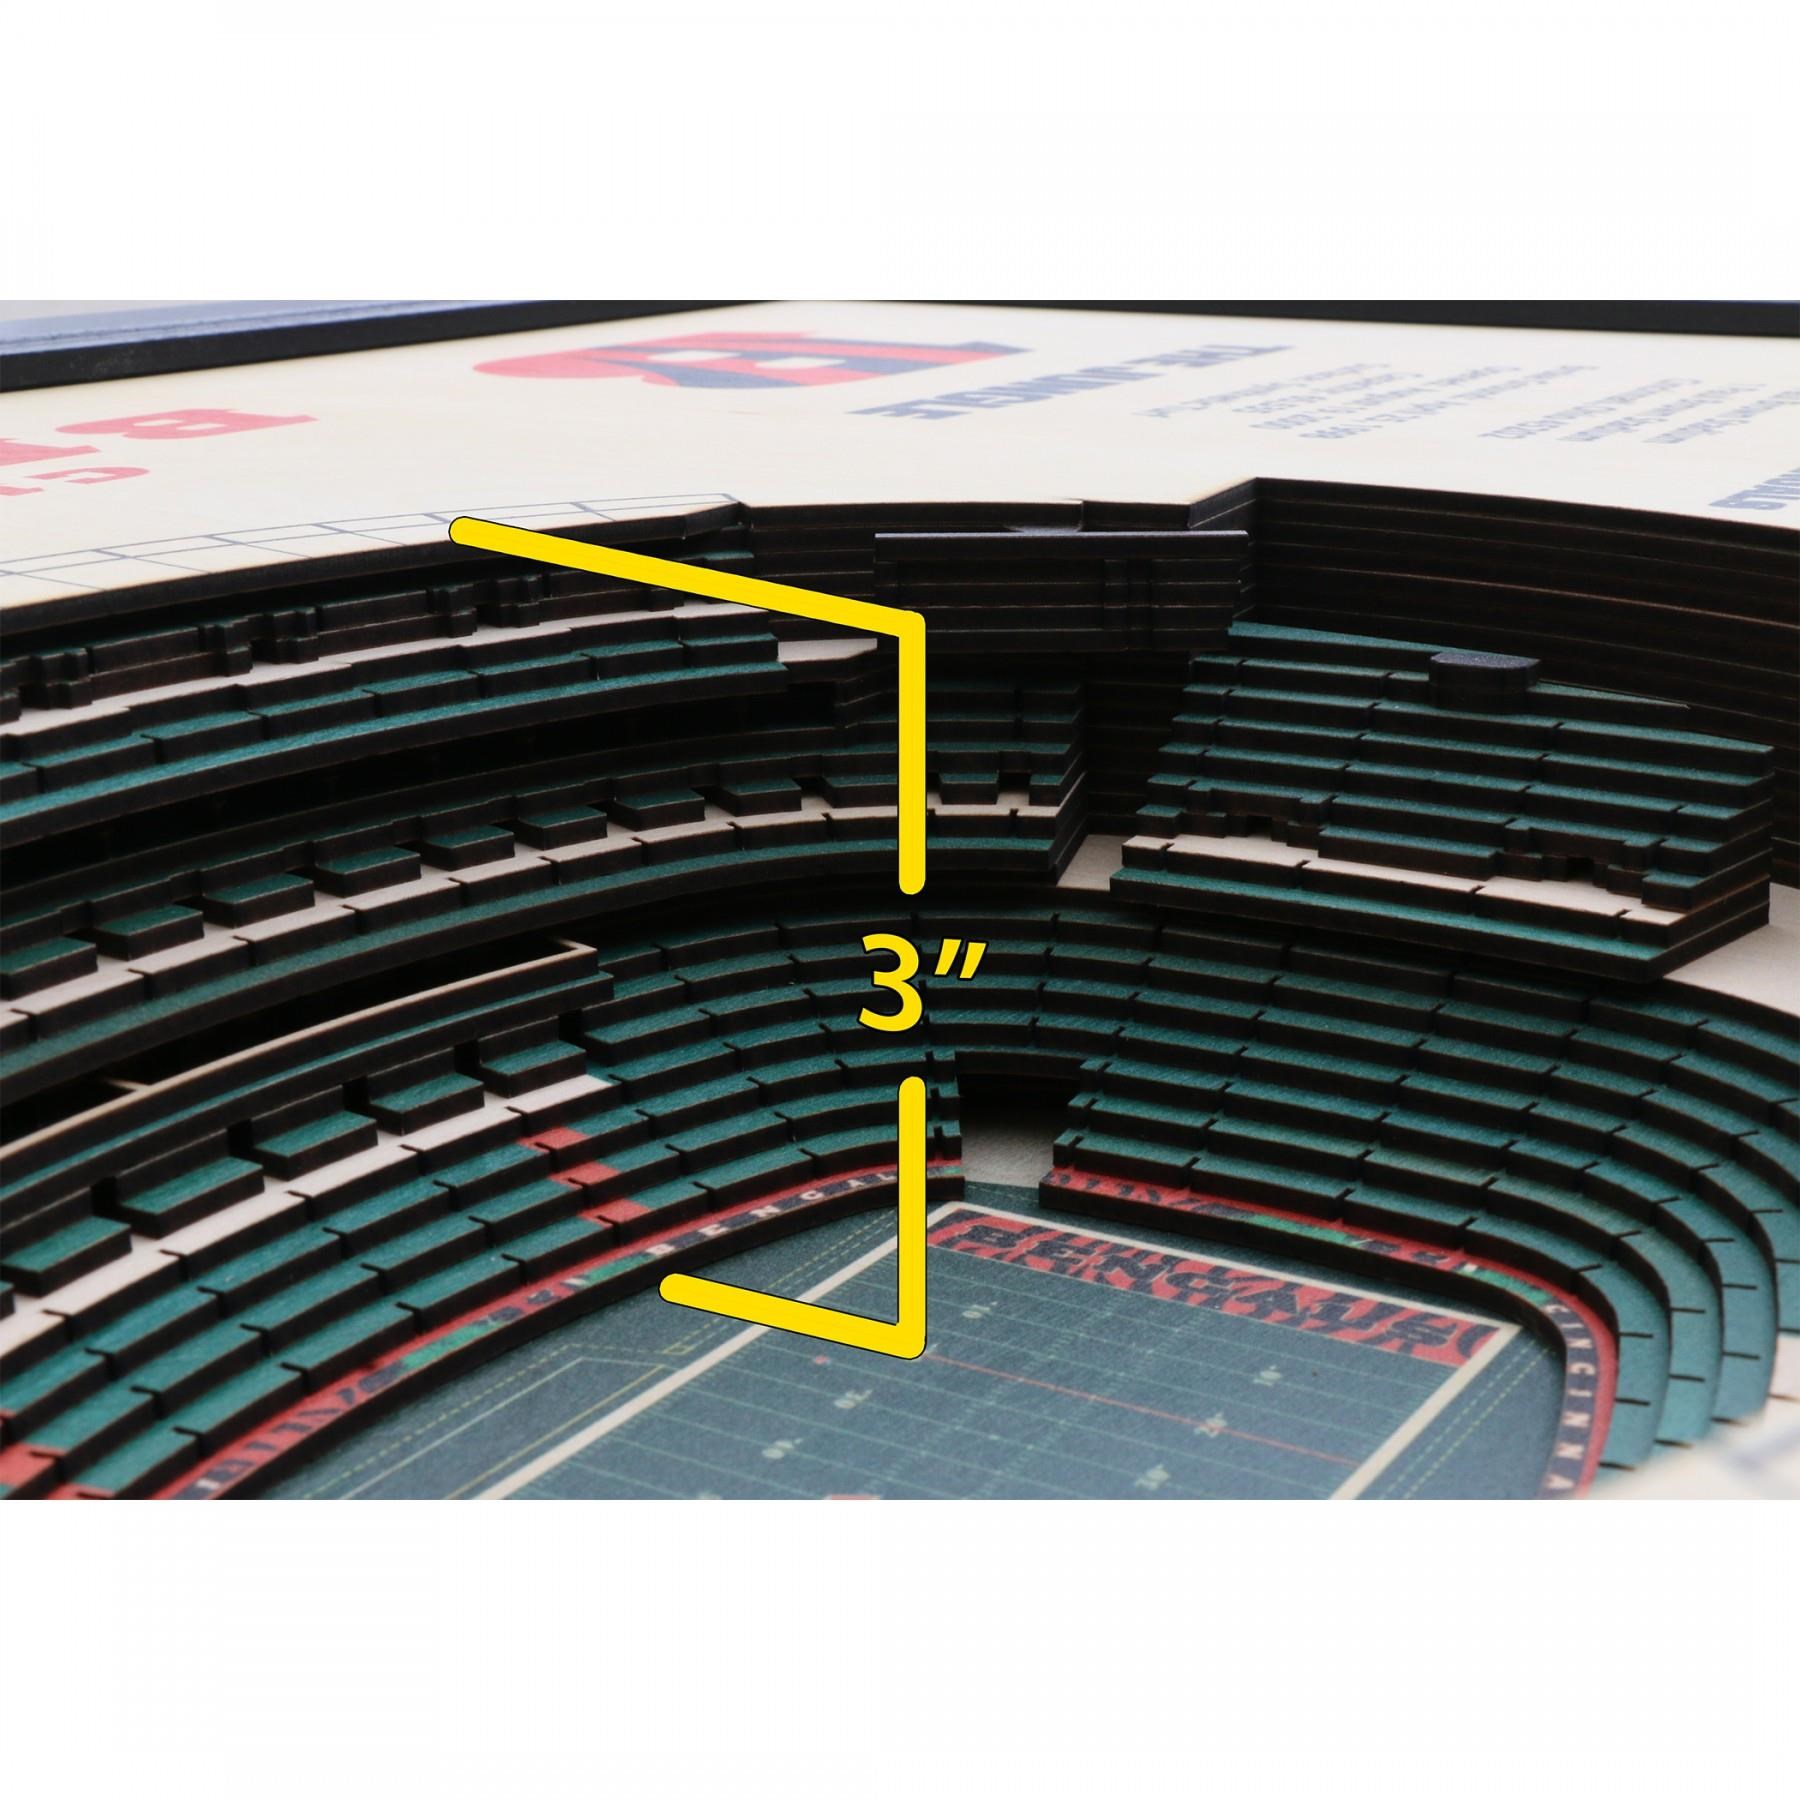 Seattle Seahawks Stadium Seating Chart 3d